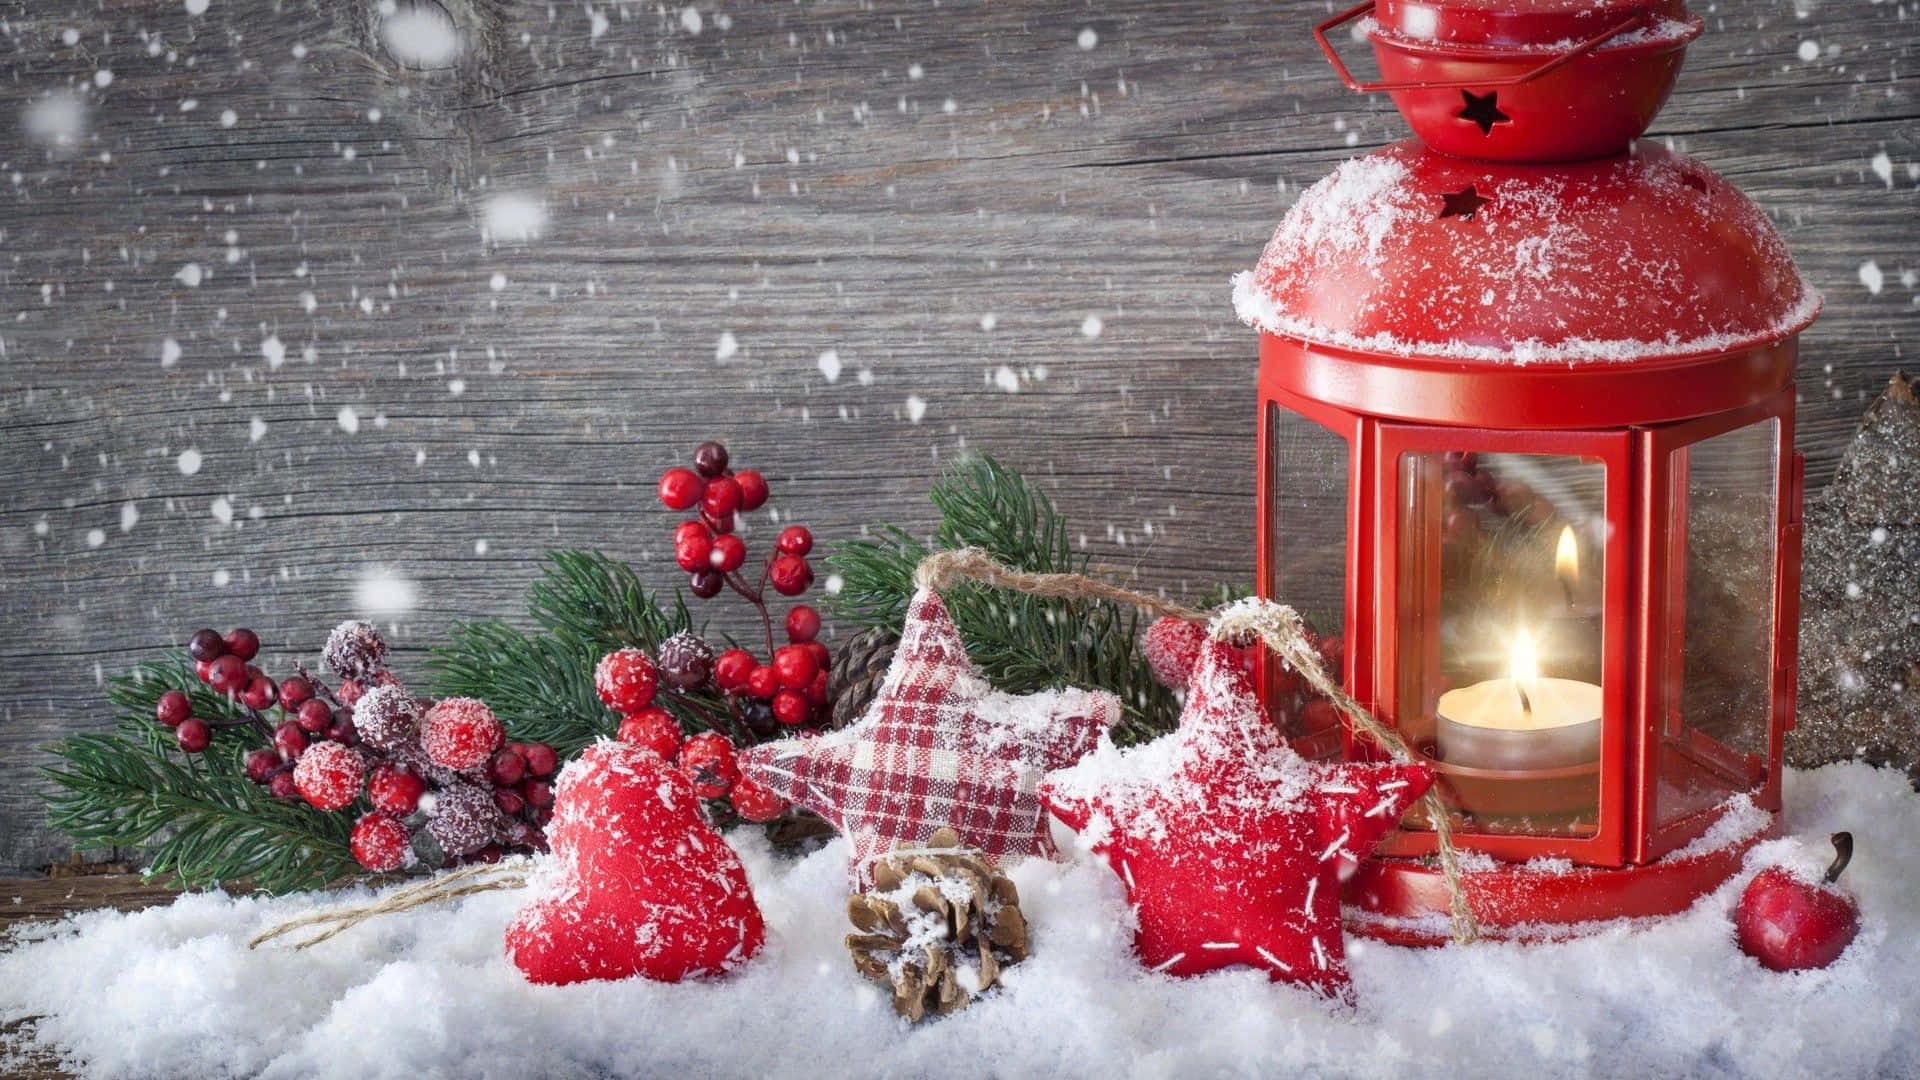 Download A winter wonderland awaits during the Christmas season ...